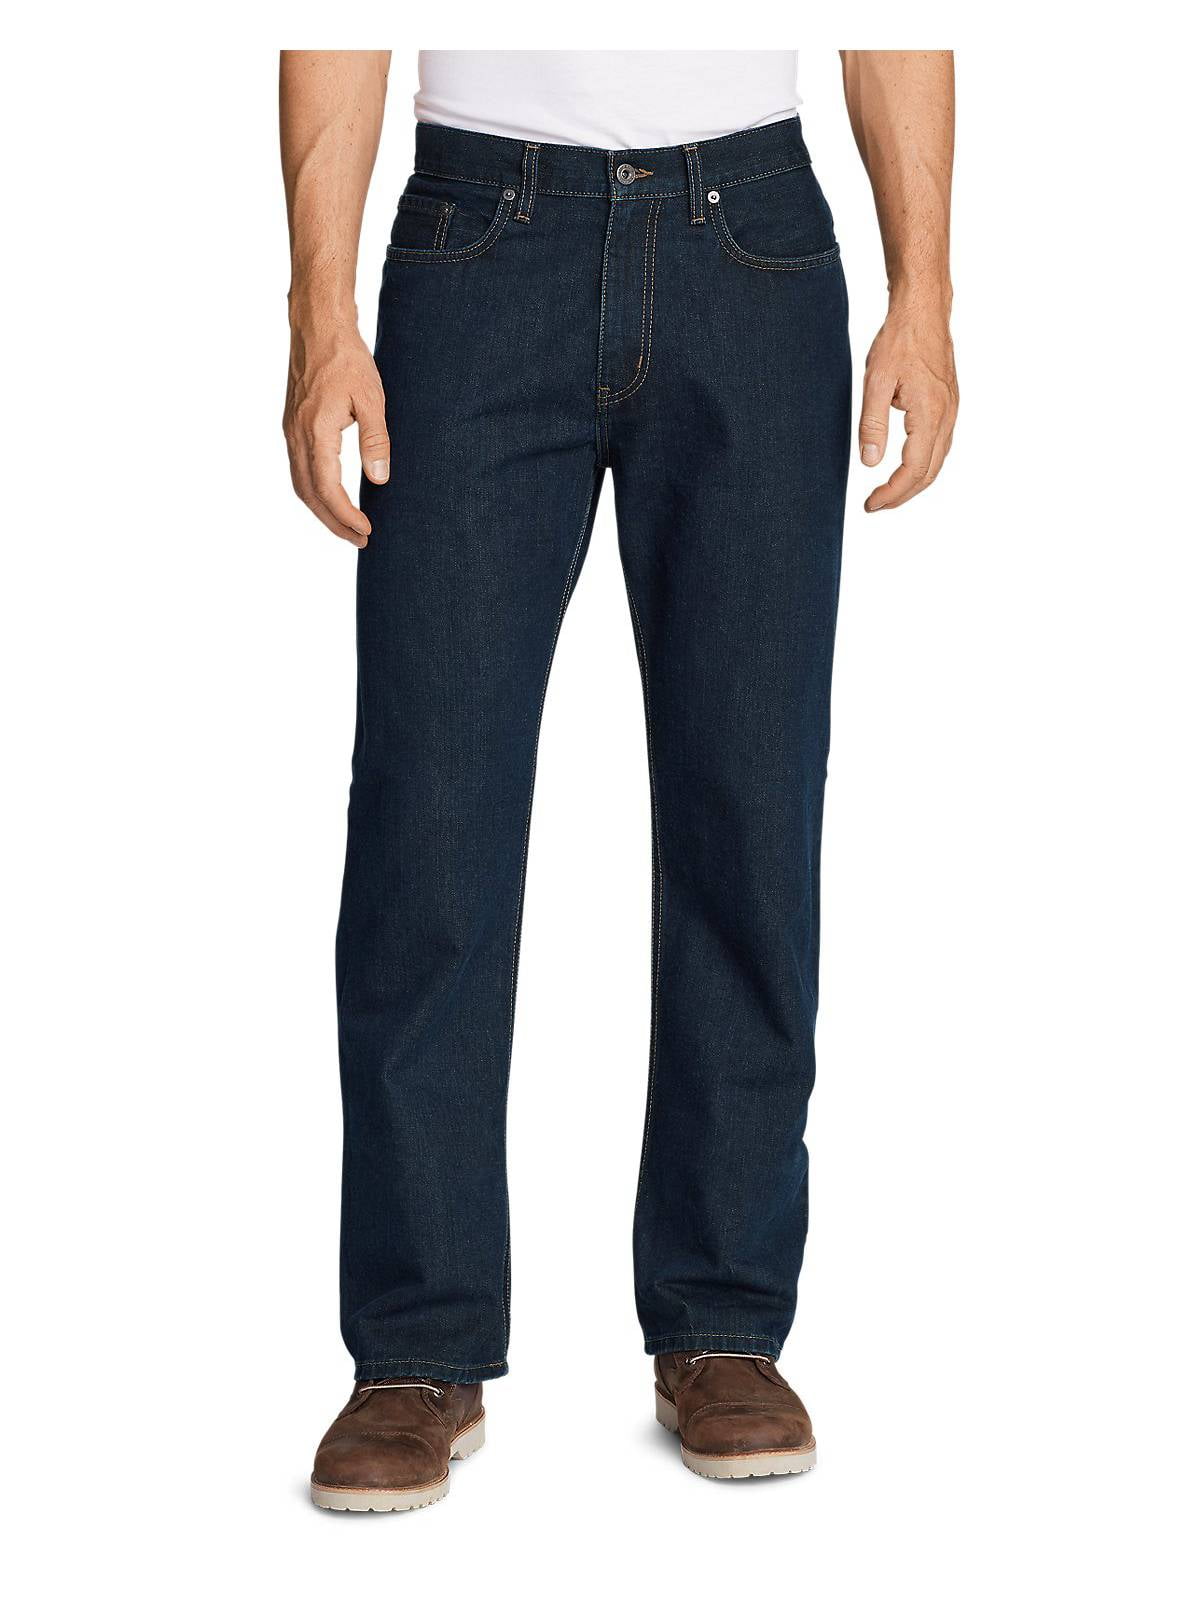 Eddie Bauer Men's Authentic Jeans - Relaxed Fit - Walmart.com